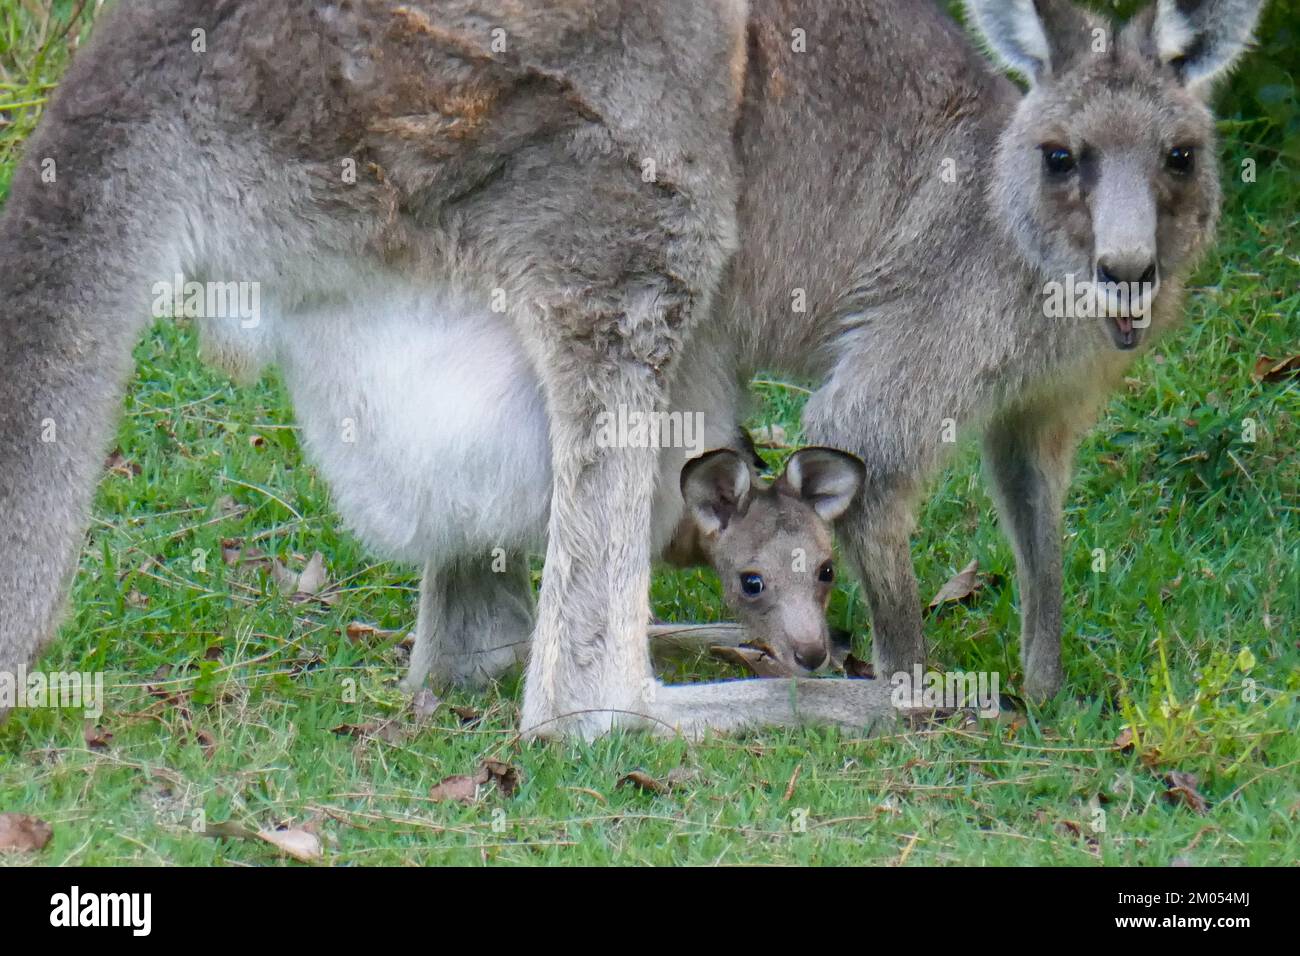 A Kangaroo, Kangaroos or a Joey in Australia Stock Photo